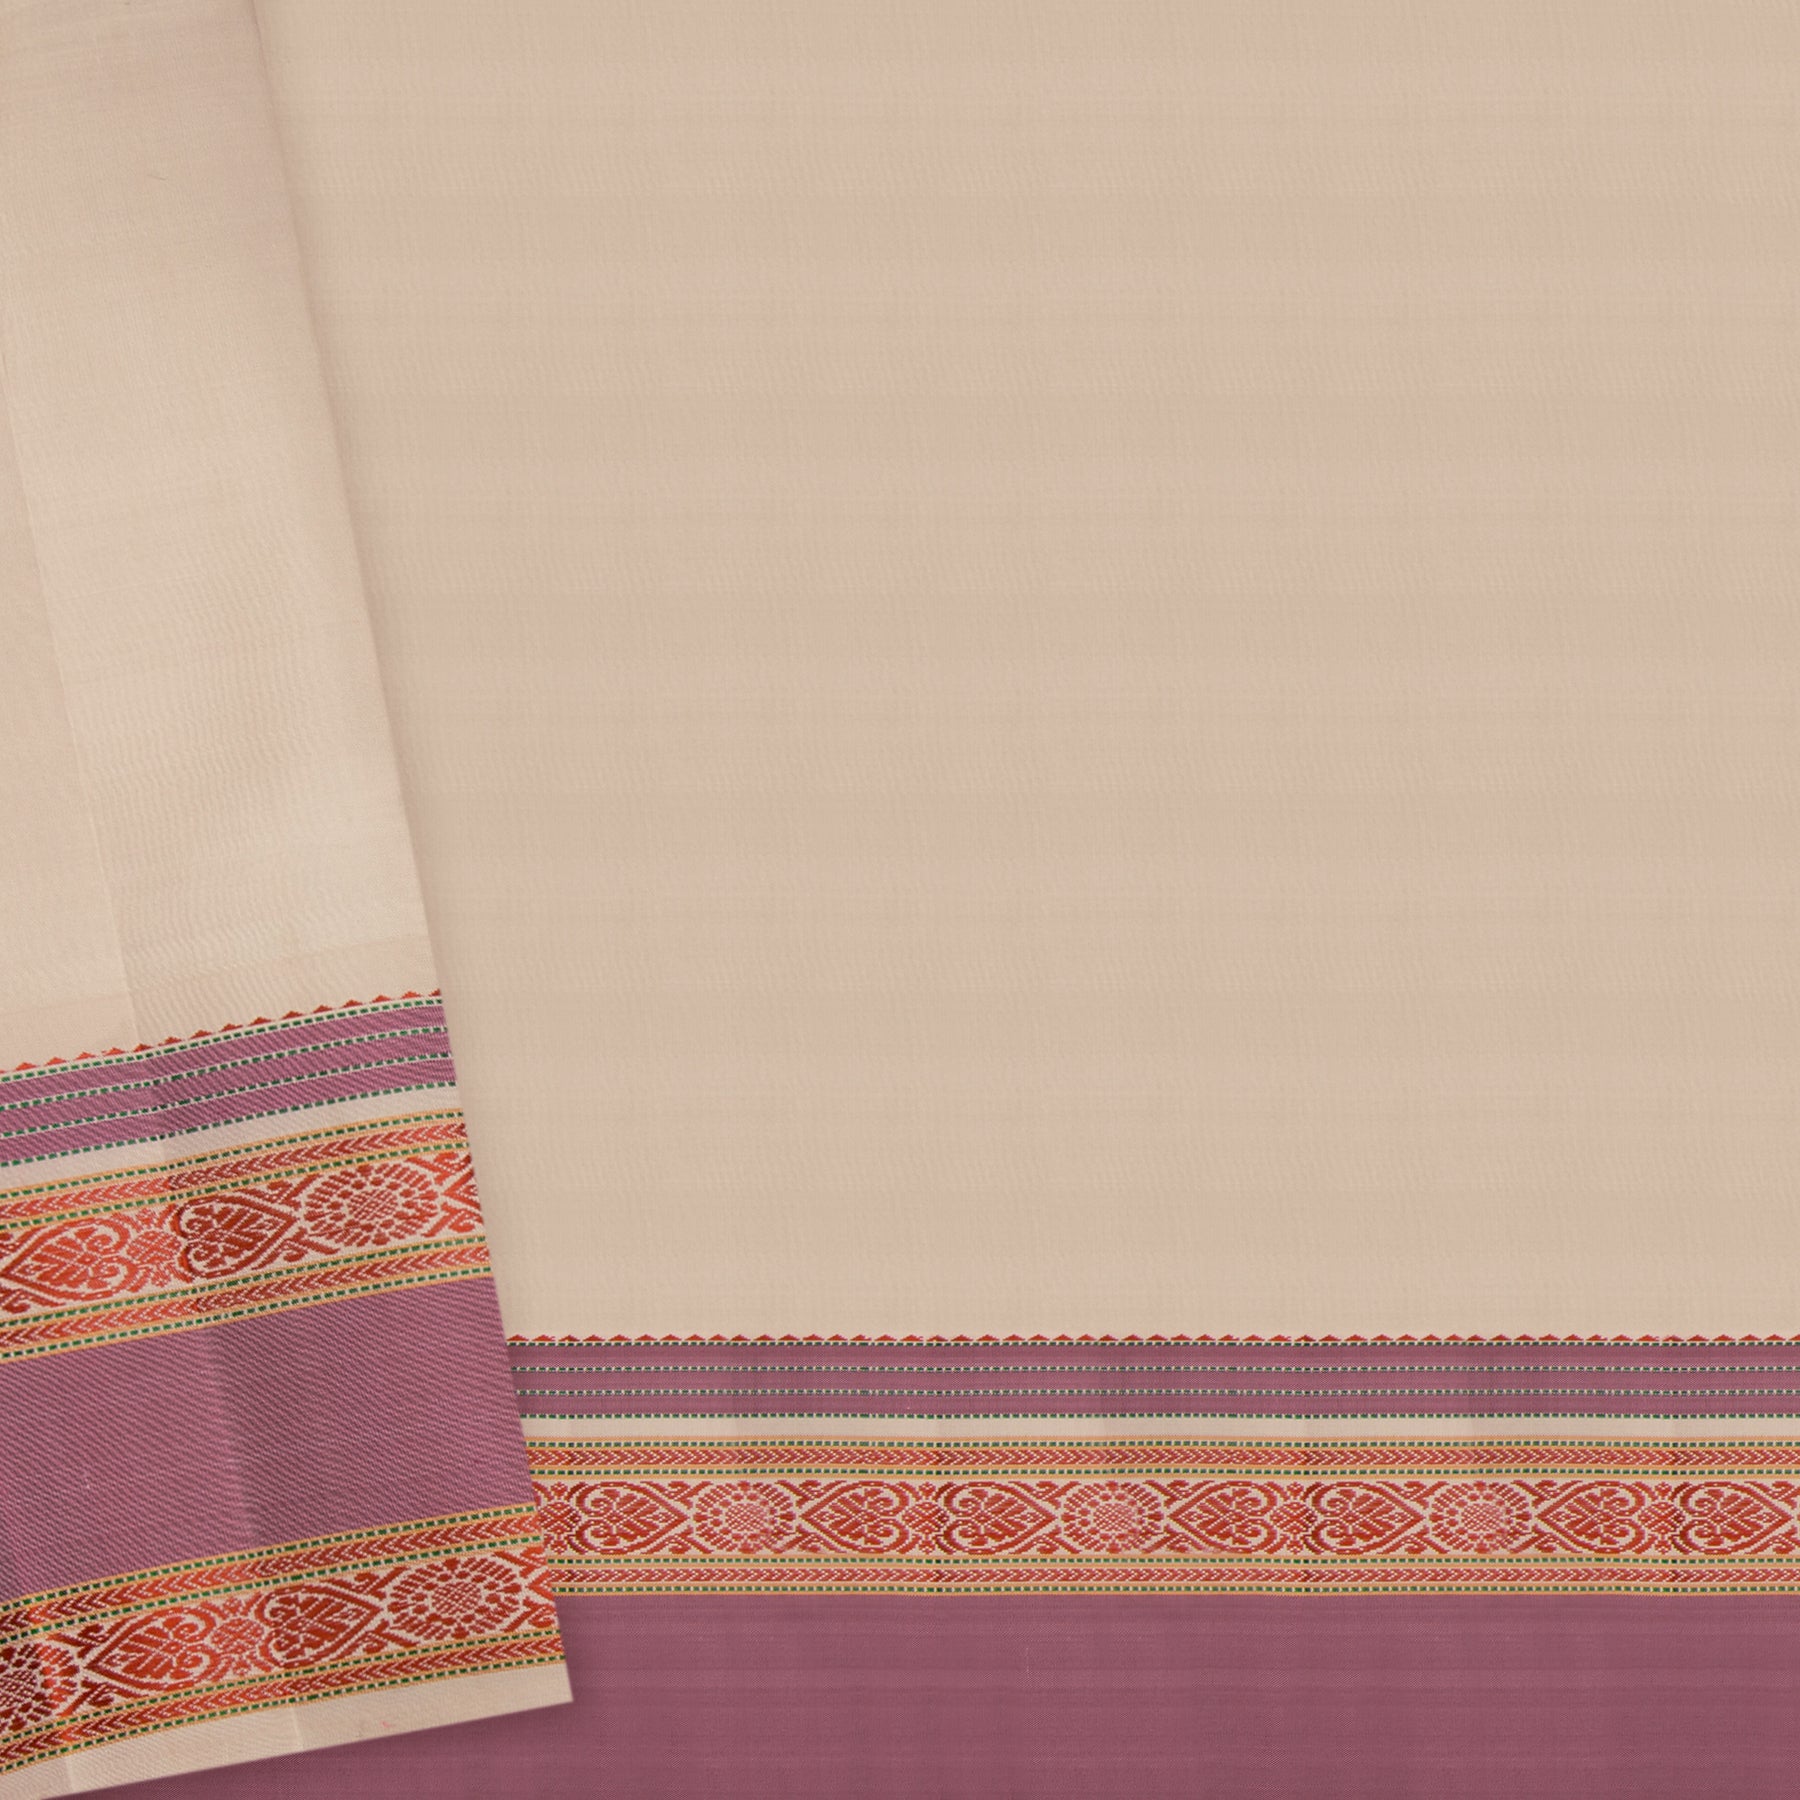 Kanakavalli Kanjivaram Silk Sari 23-040-HS001-10315 - Blouse View